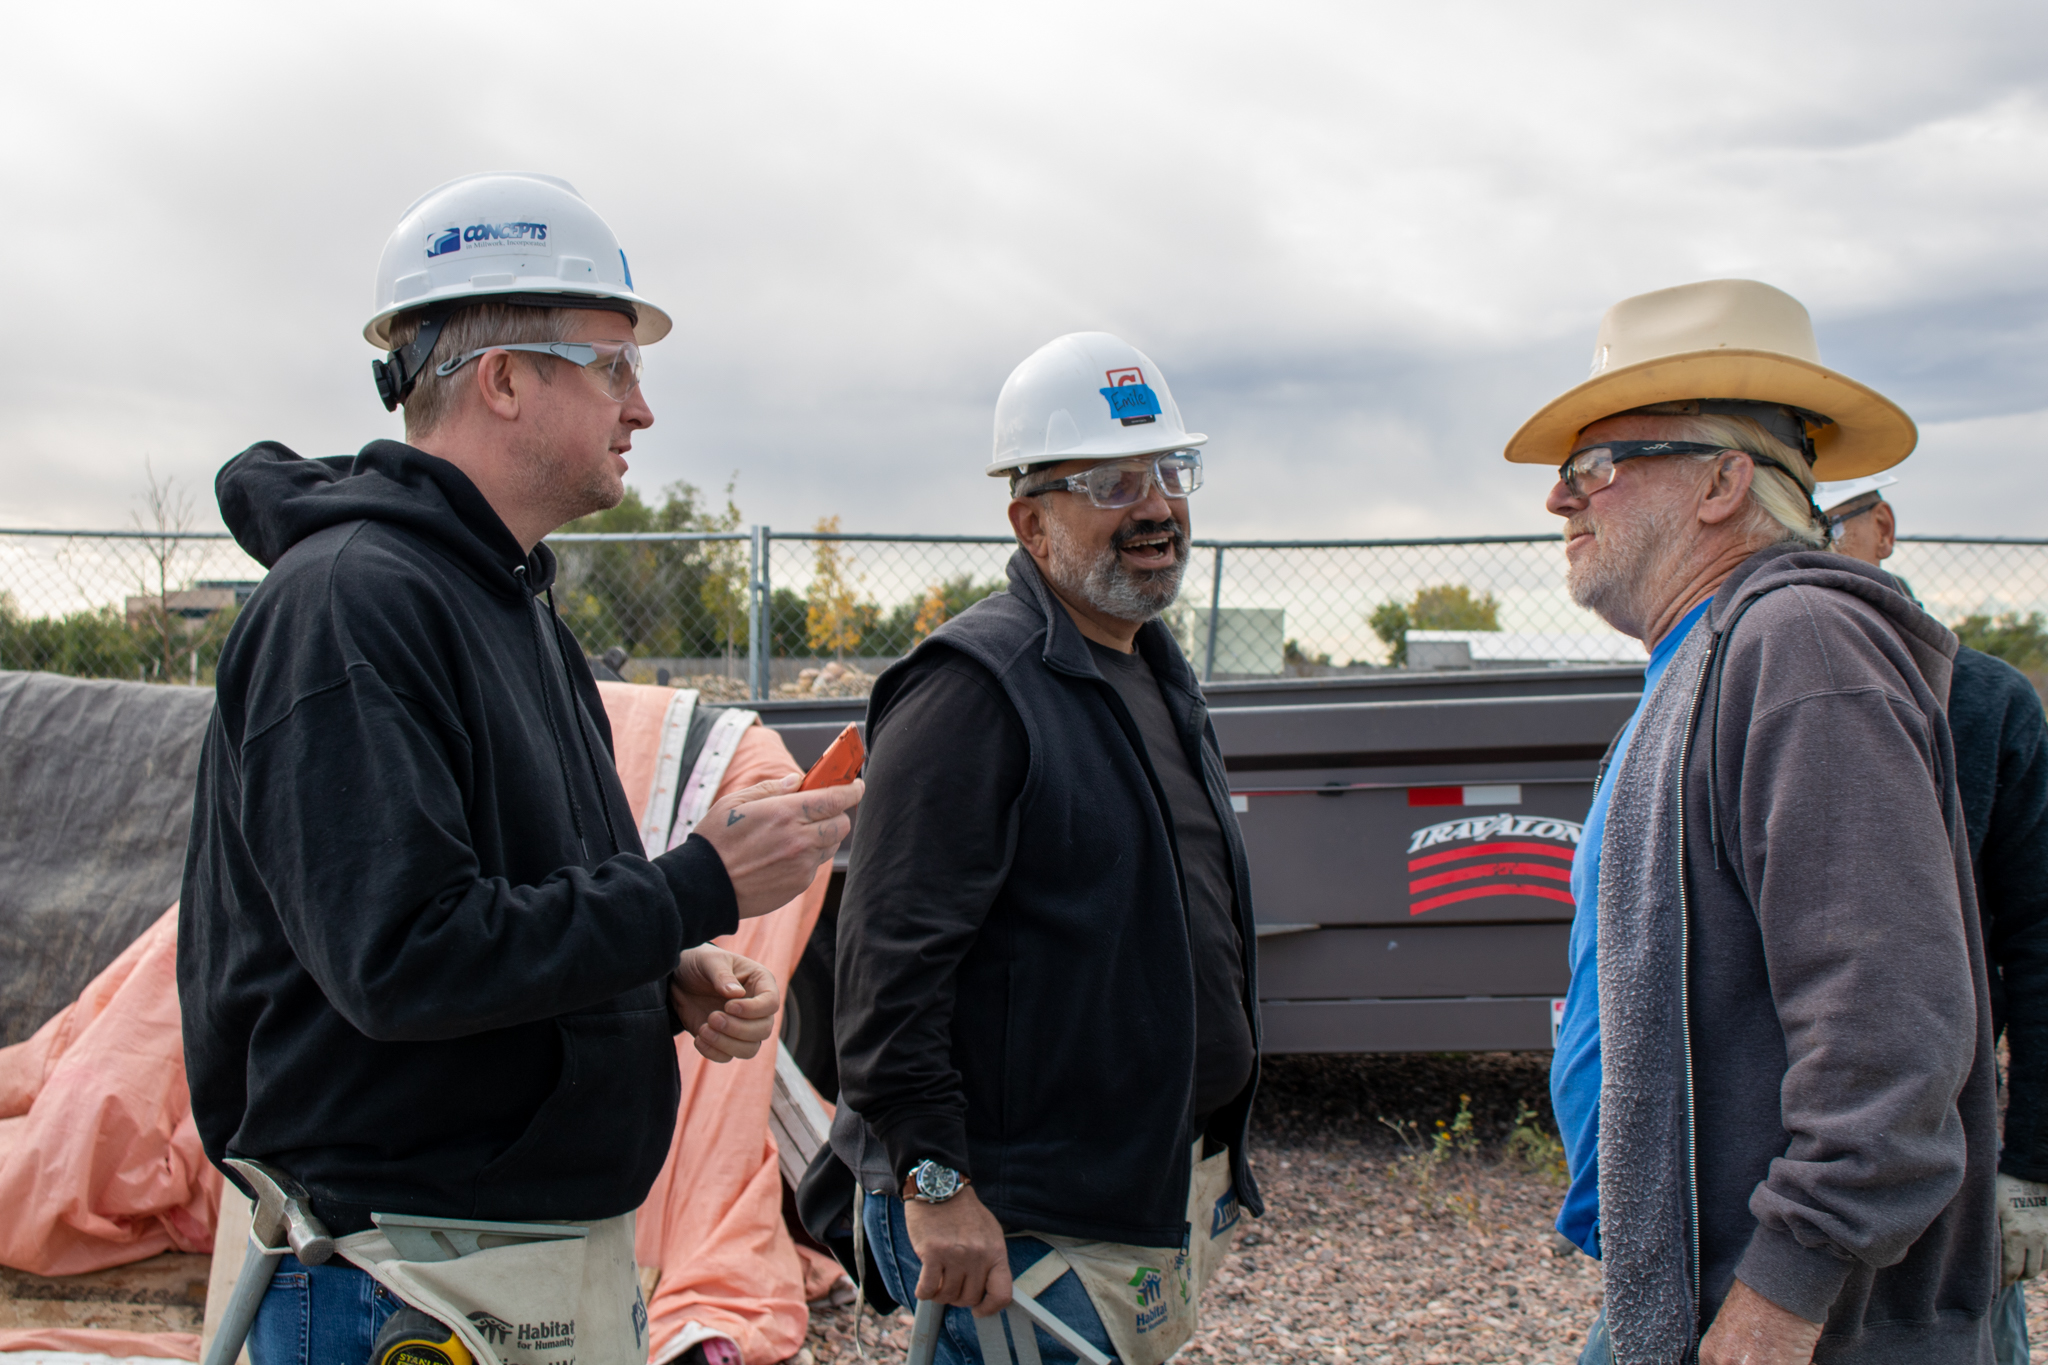 Volunteers in hard hats speaking with construction staff